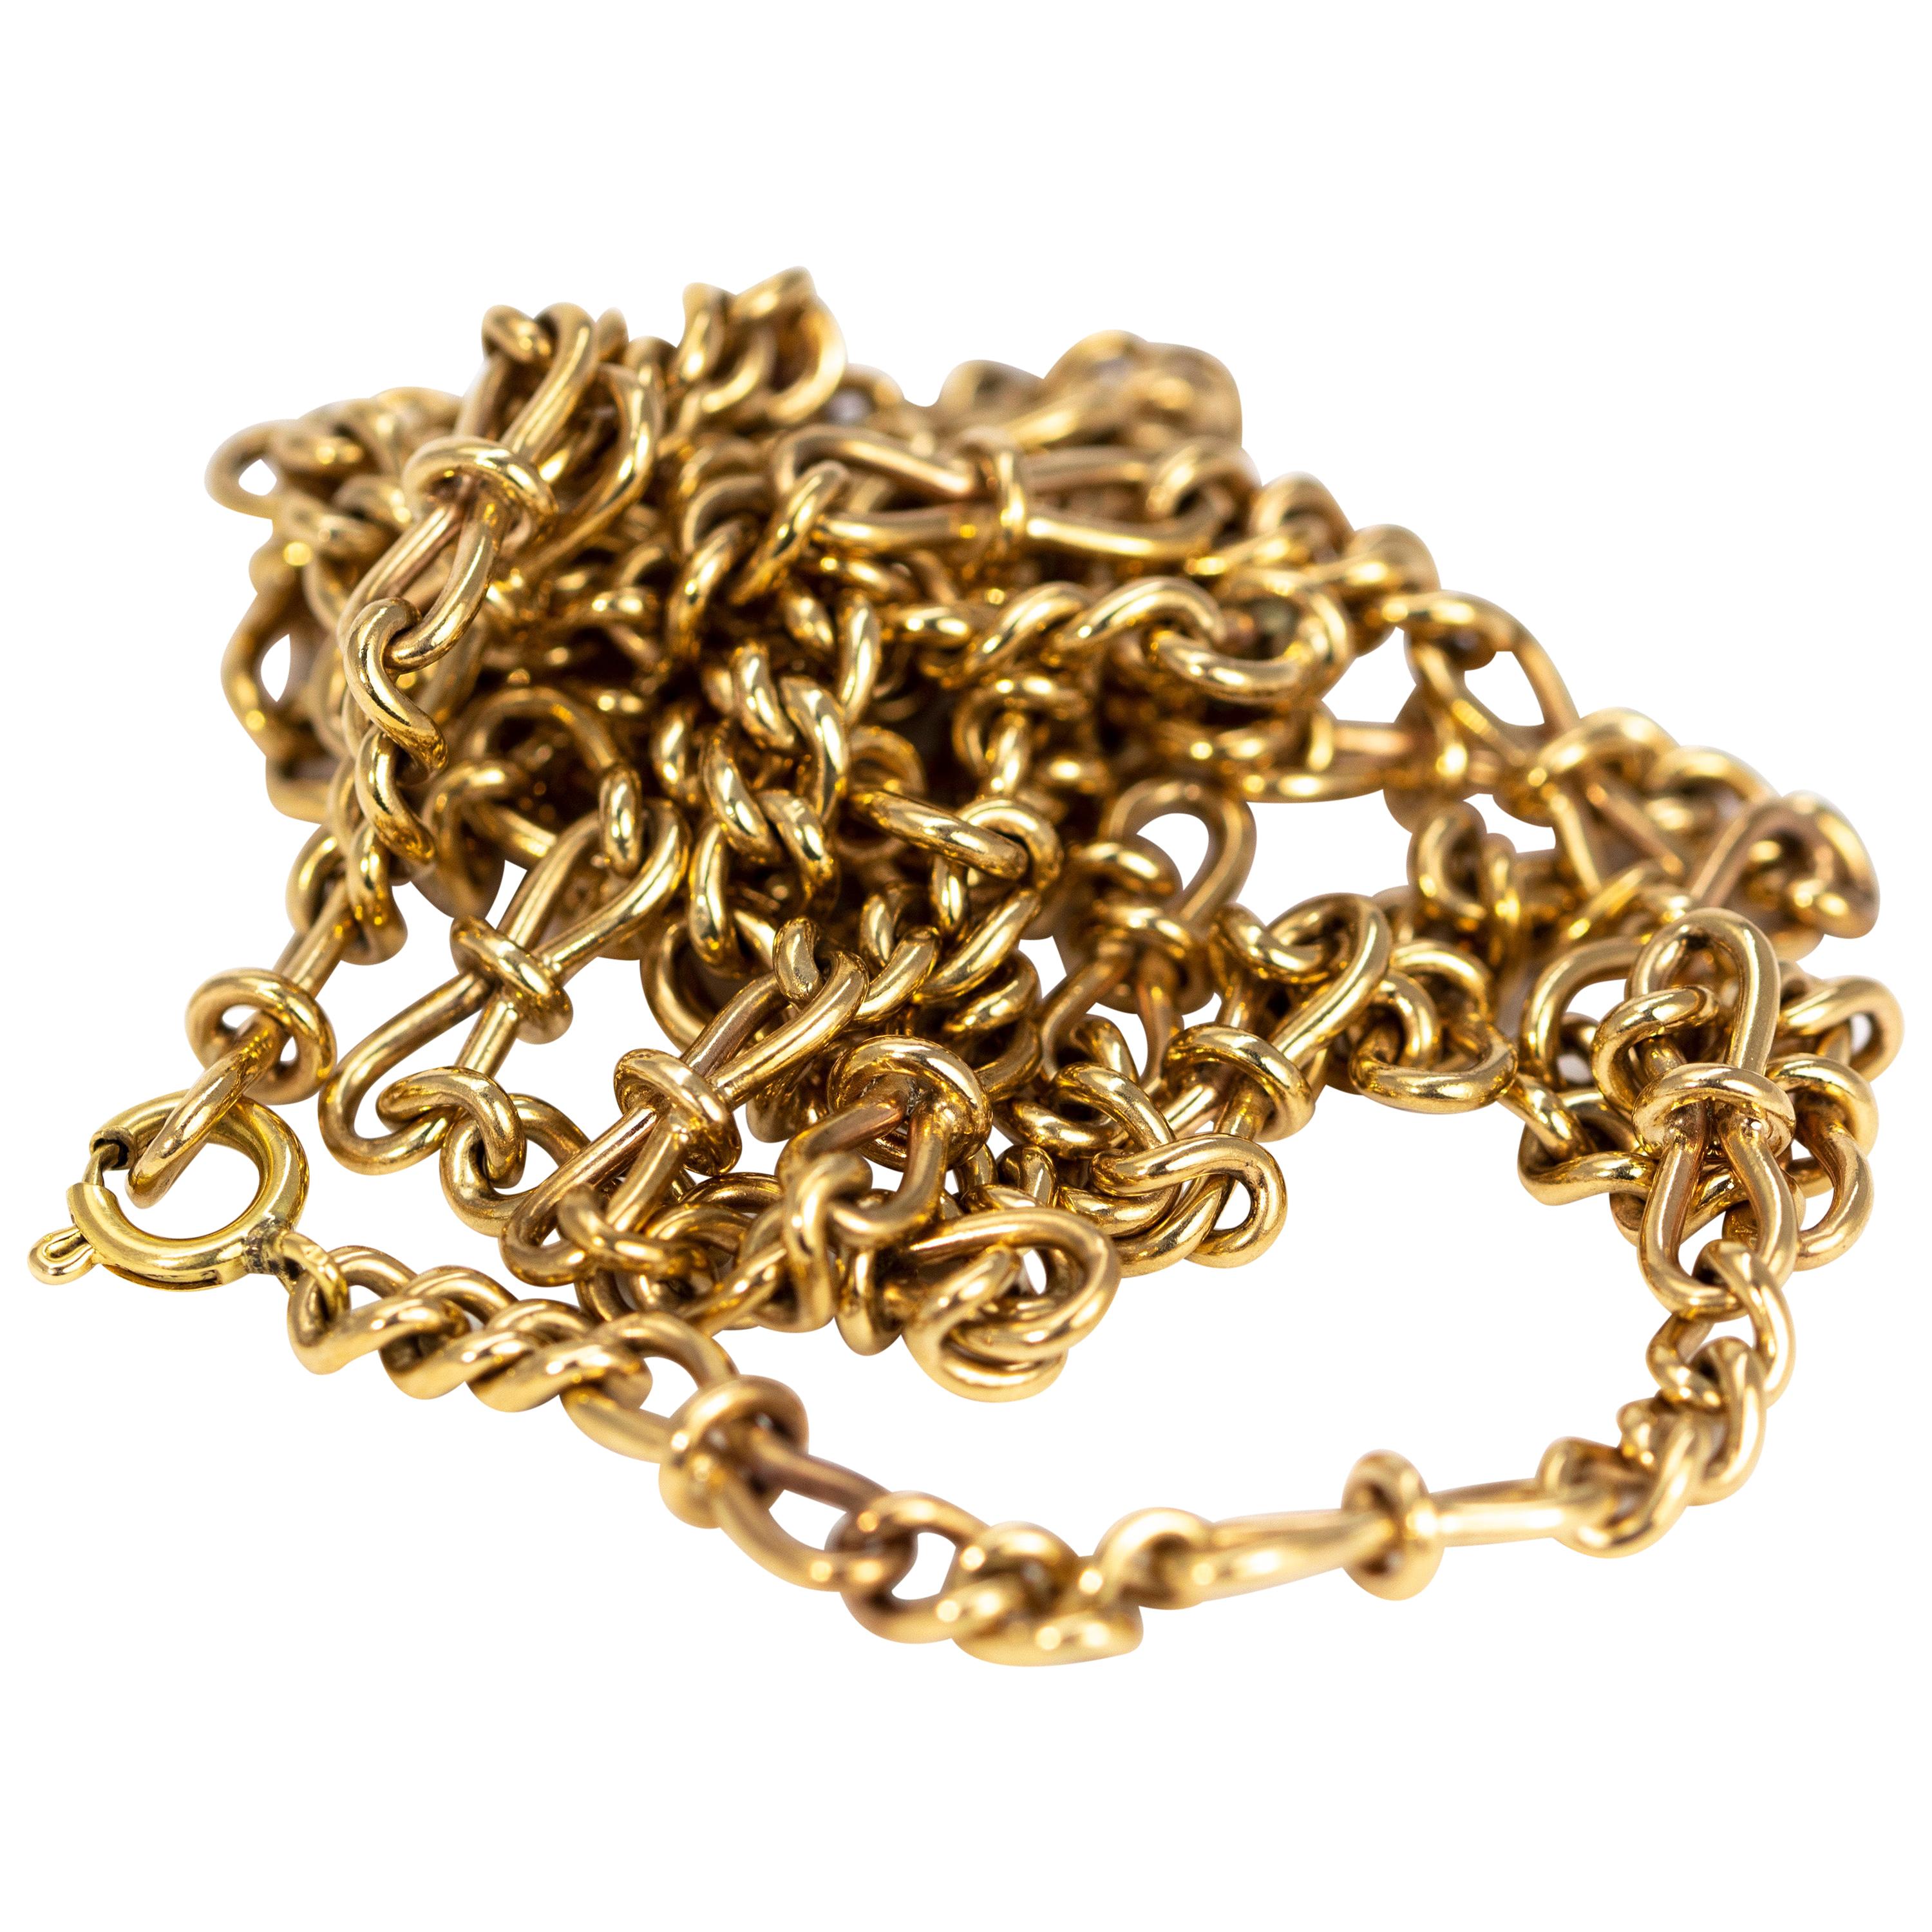 Vintage 9 Carat Gold Chain